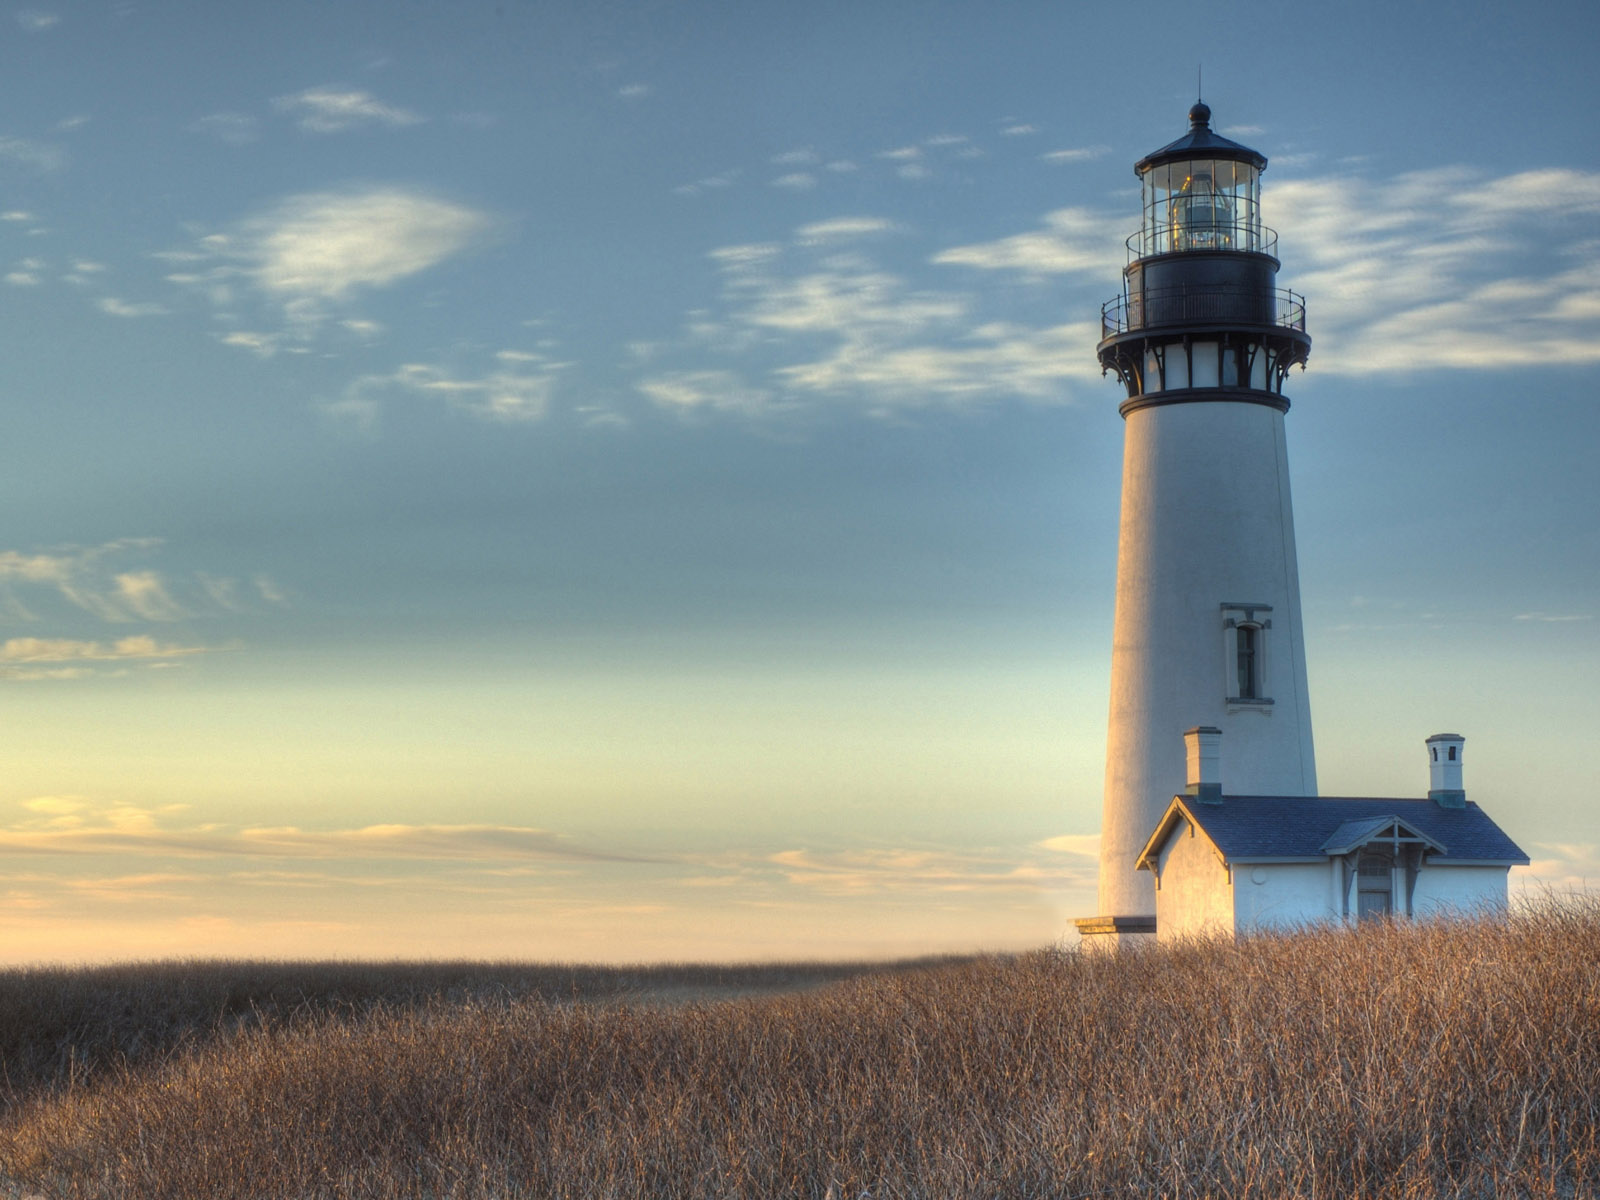 Lighthouse upon Golden Fields by JoeTheRabbit